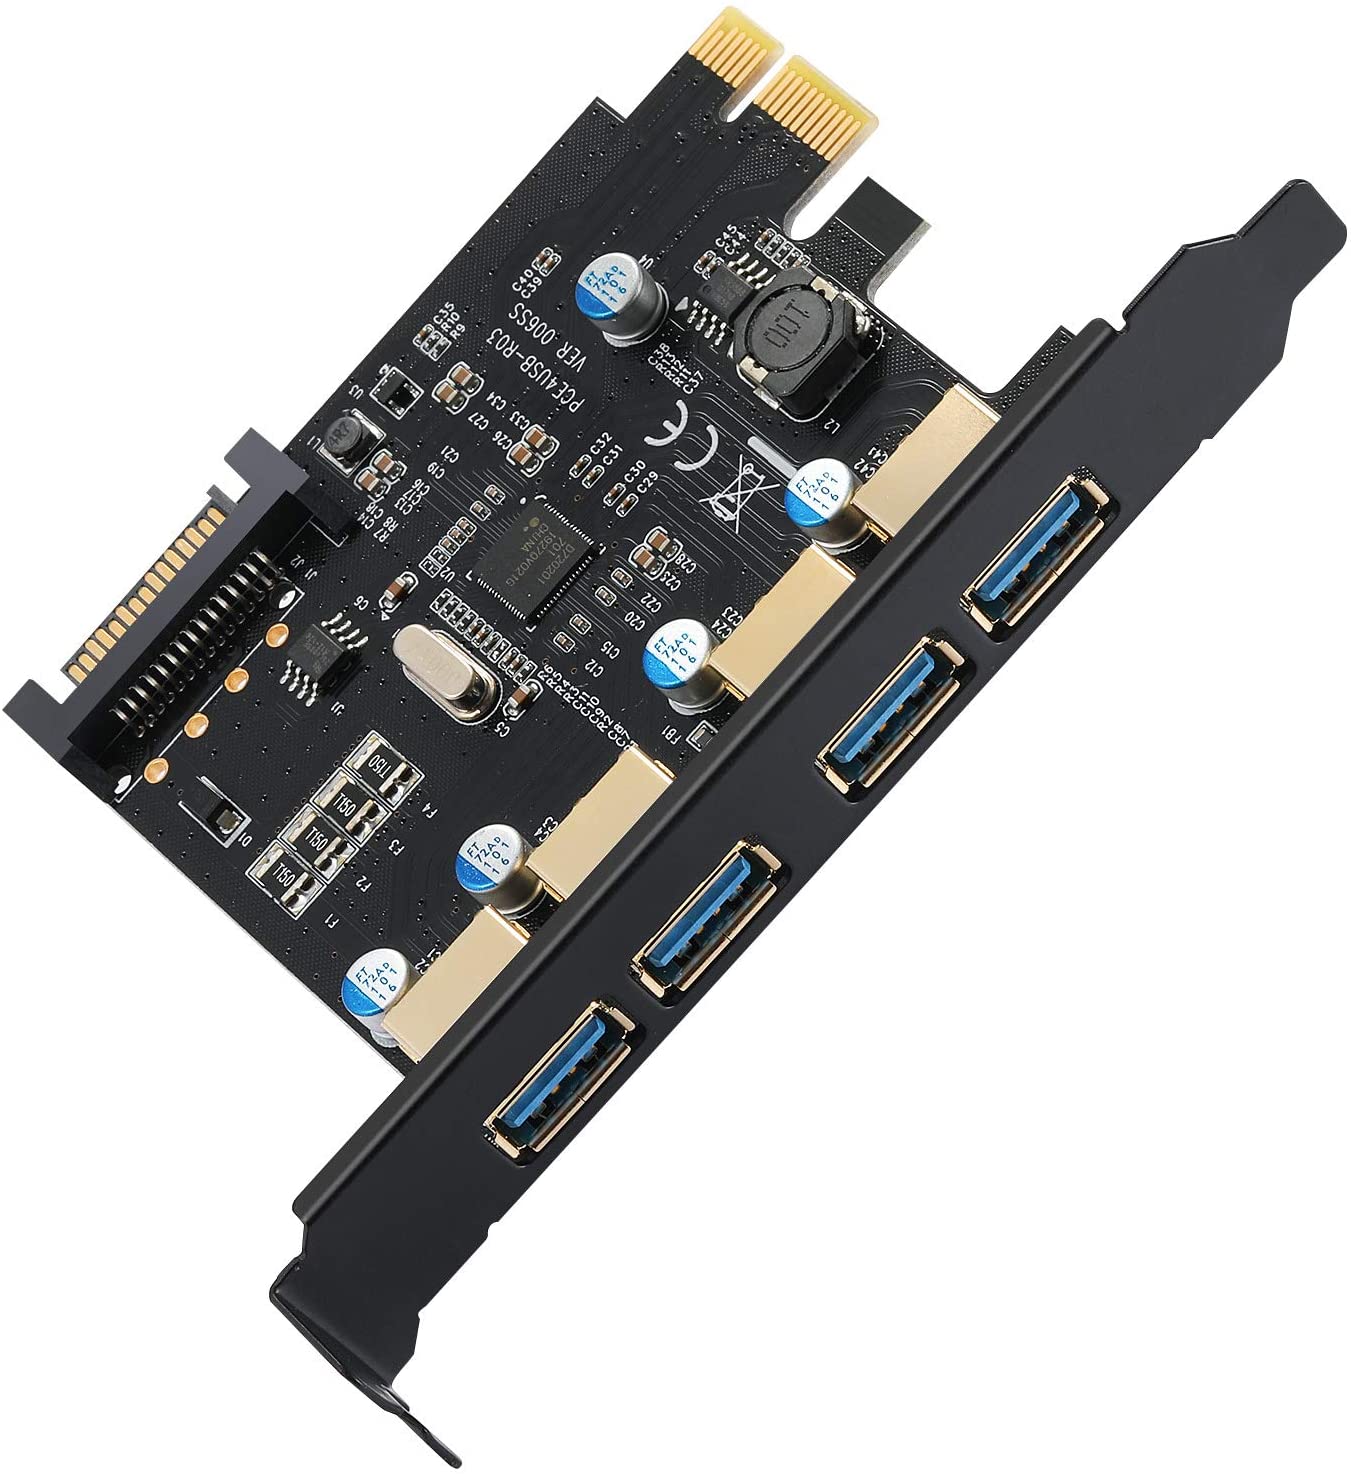 HF-PCIEU3-4: USB3.0 PCi PCI-E 4-Port Expansion Card USB 3.0 Type-A USB 15-pin SATA Power Connector (Includes SATA Cable), Suitable for Windows XP/Vista / 7/8/10